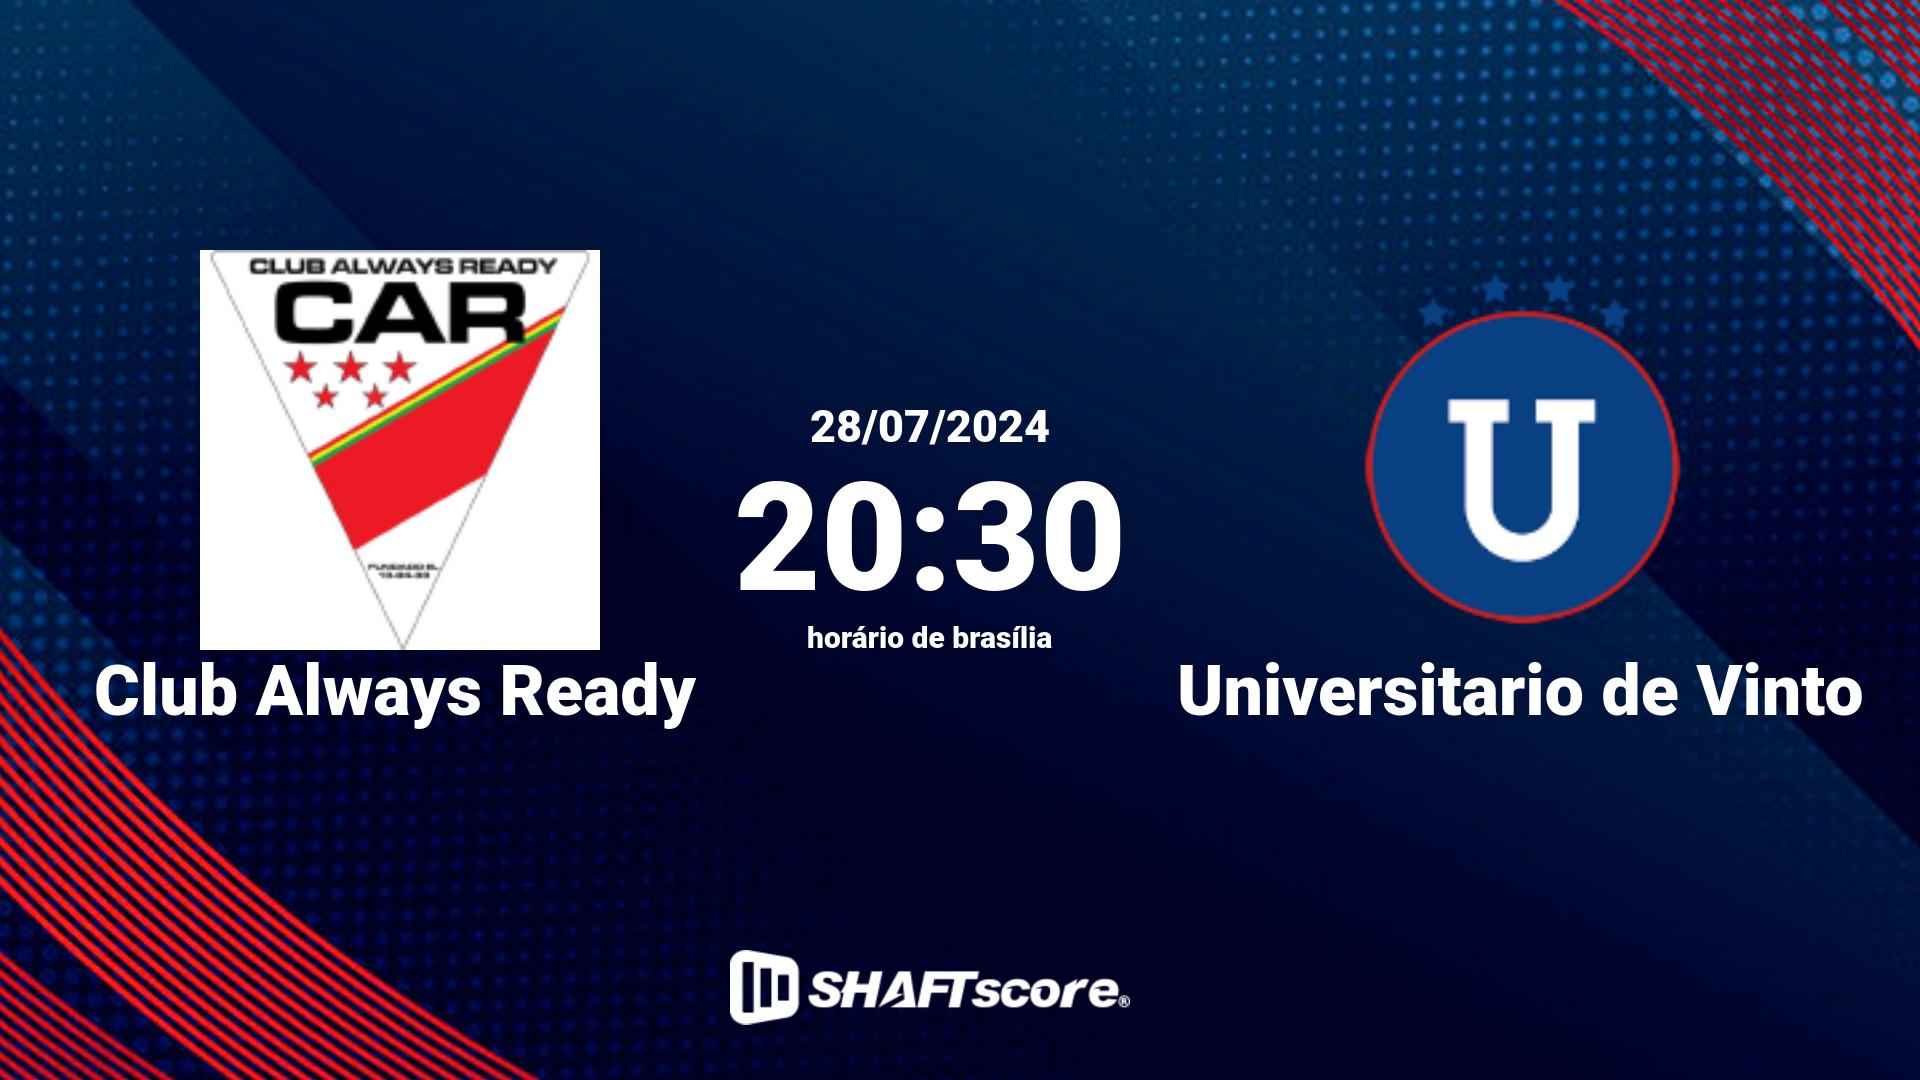 Estatísticas do jogo Club Always Ready vs Universitario de Vinto 28.07 20:30